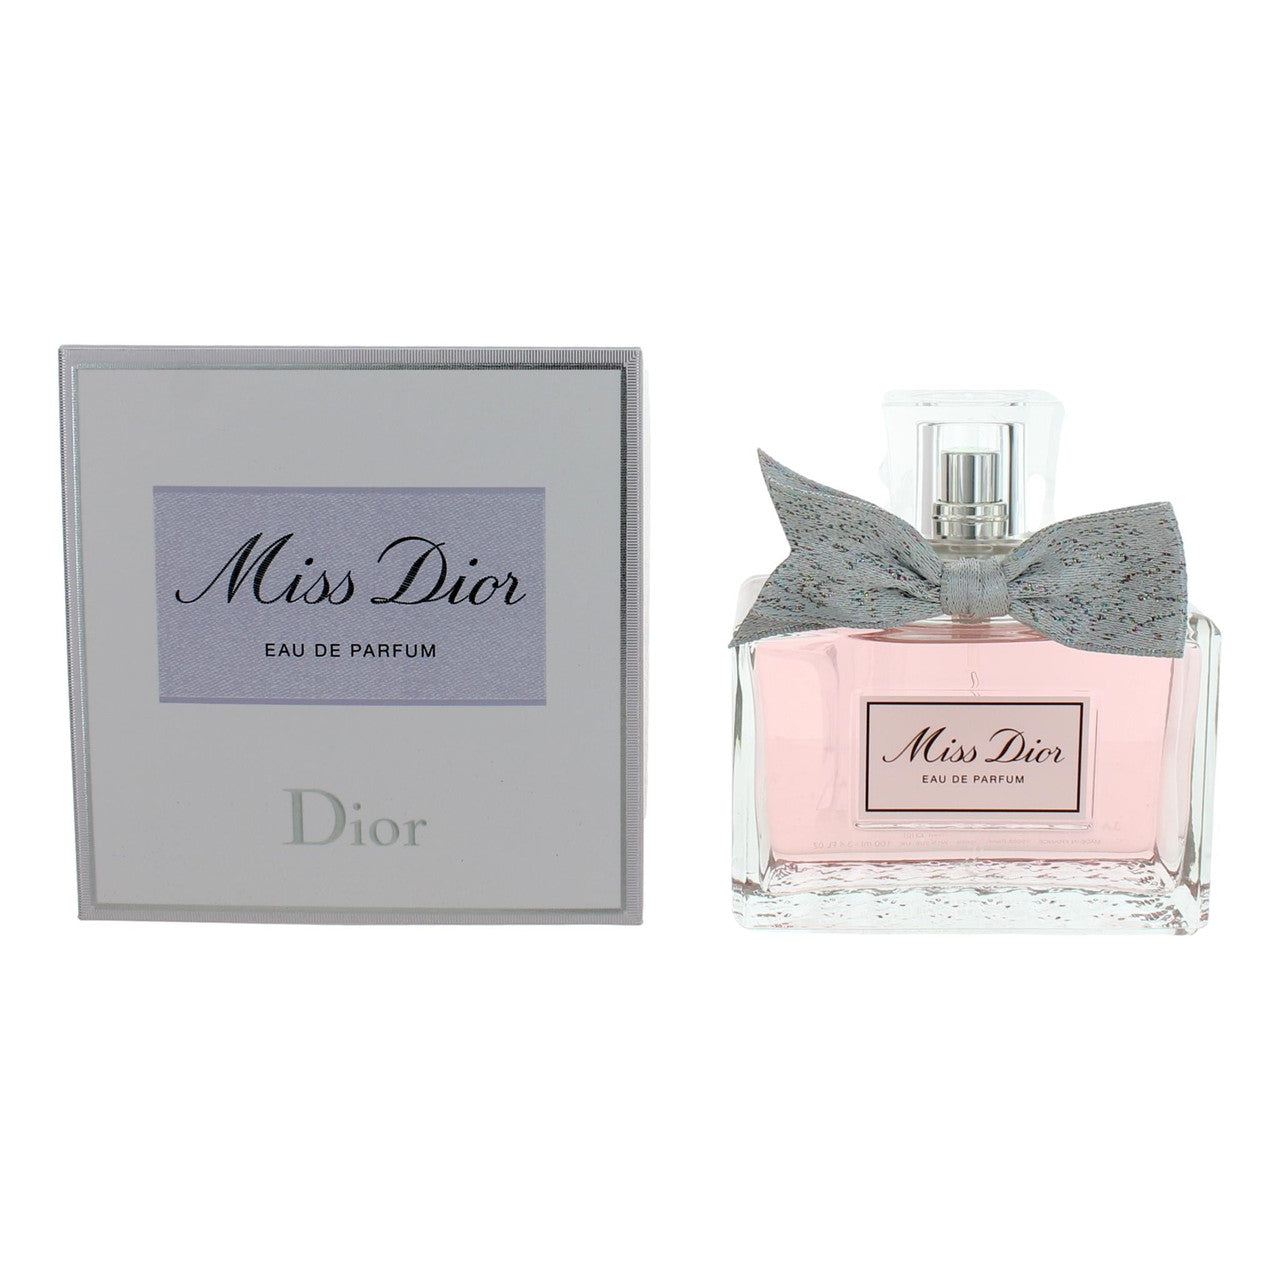 Miss Dior by Christian Dior, 3.4 oz EDP Spray